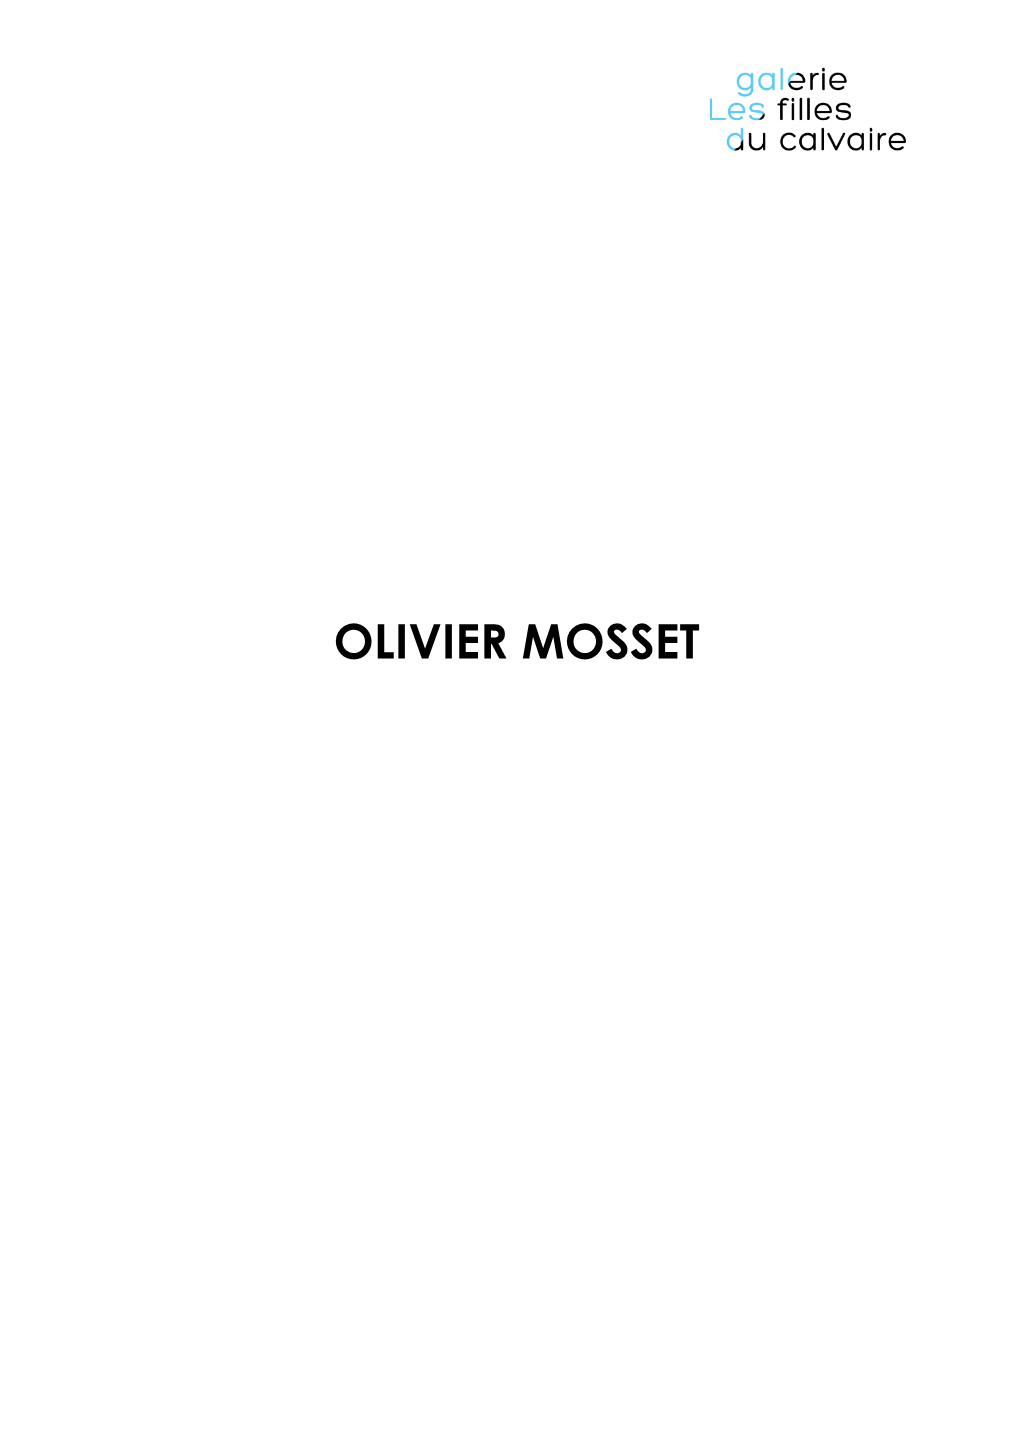 Olivier Mosset Est Né À Berne, Suisse, En 1944